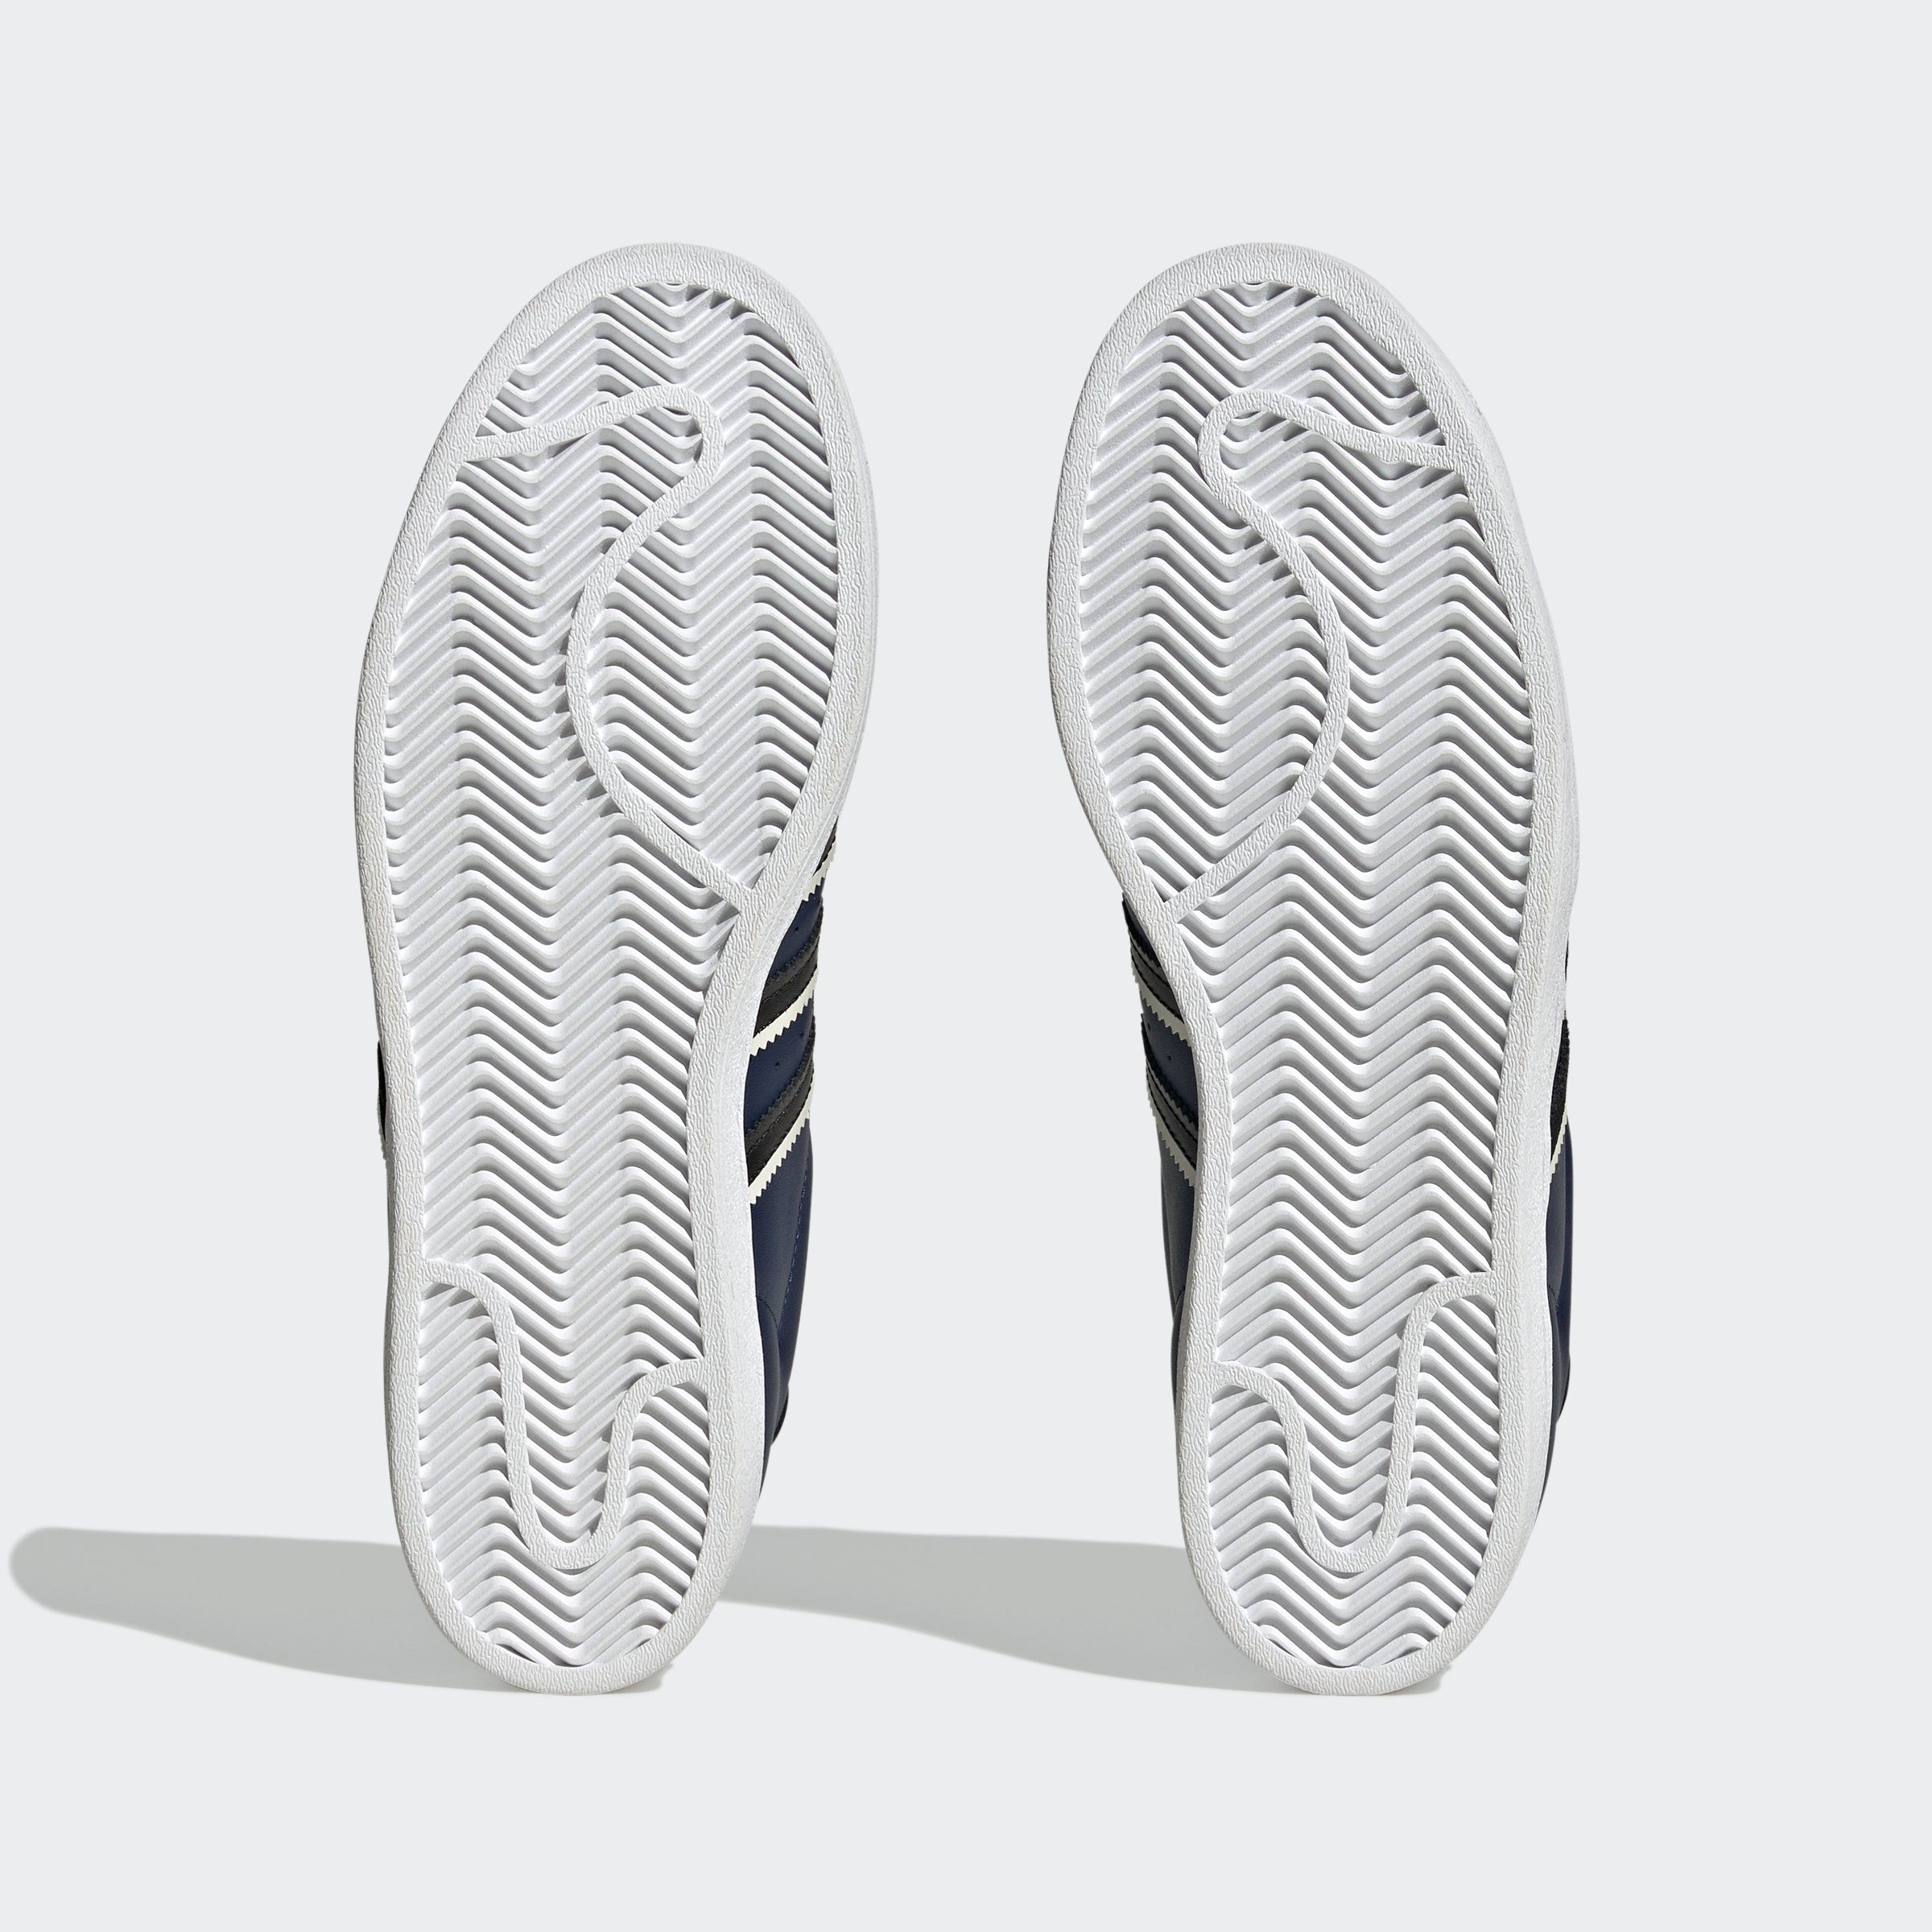 SUPERSTAR Sneaker / Originals Night Core Black adidas Indigo White Core /